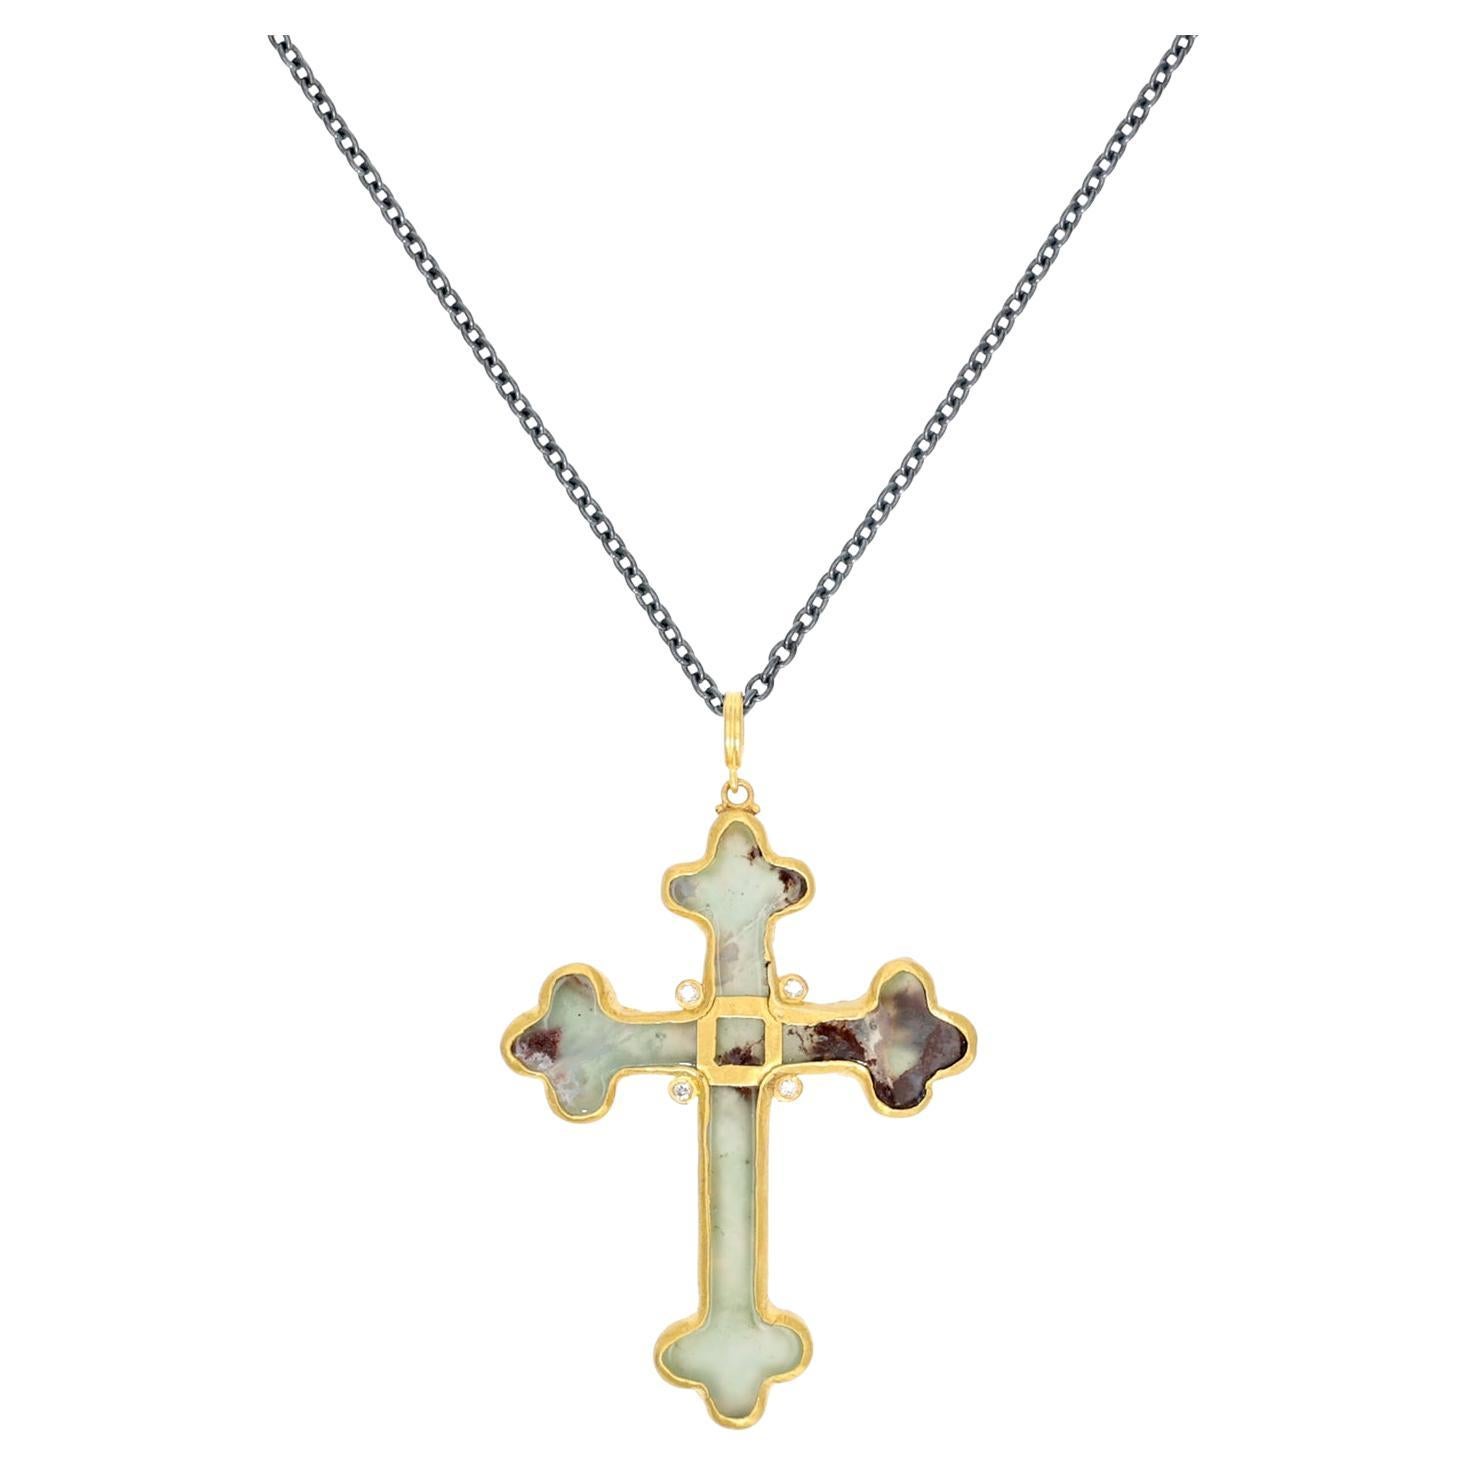 24K Gold and Oxidized Silver Aquaprase Cross Necklace by Lika Behar